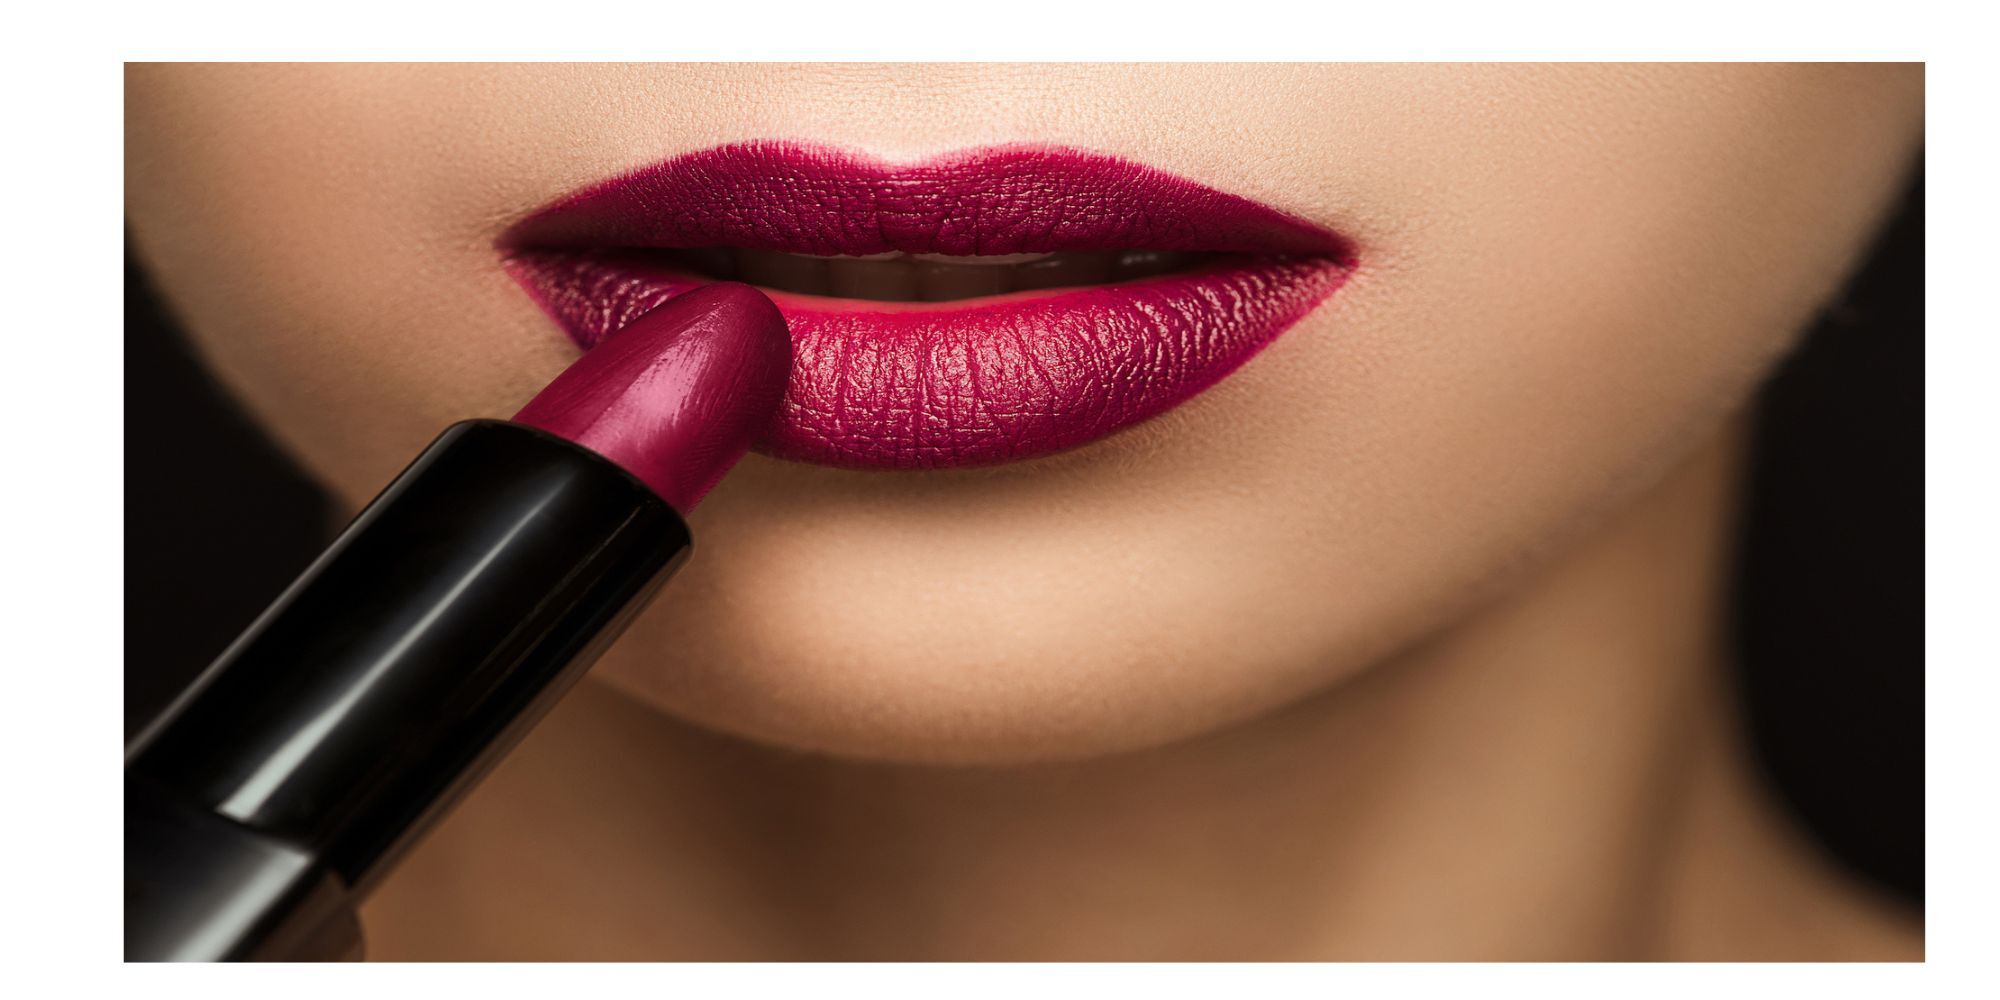 Personalized Lipstick and Lipgloss image